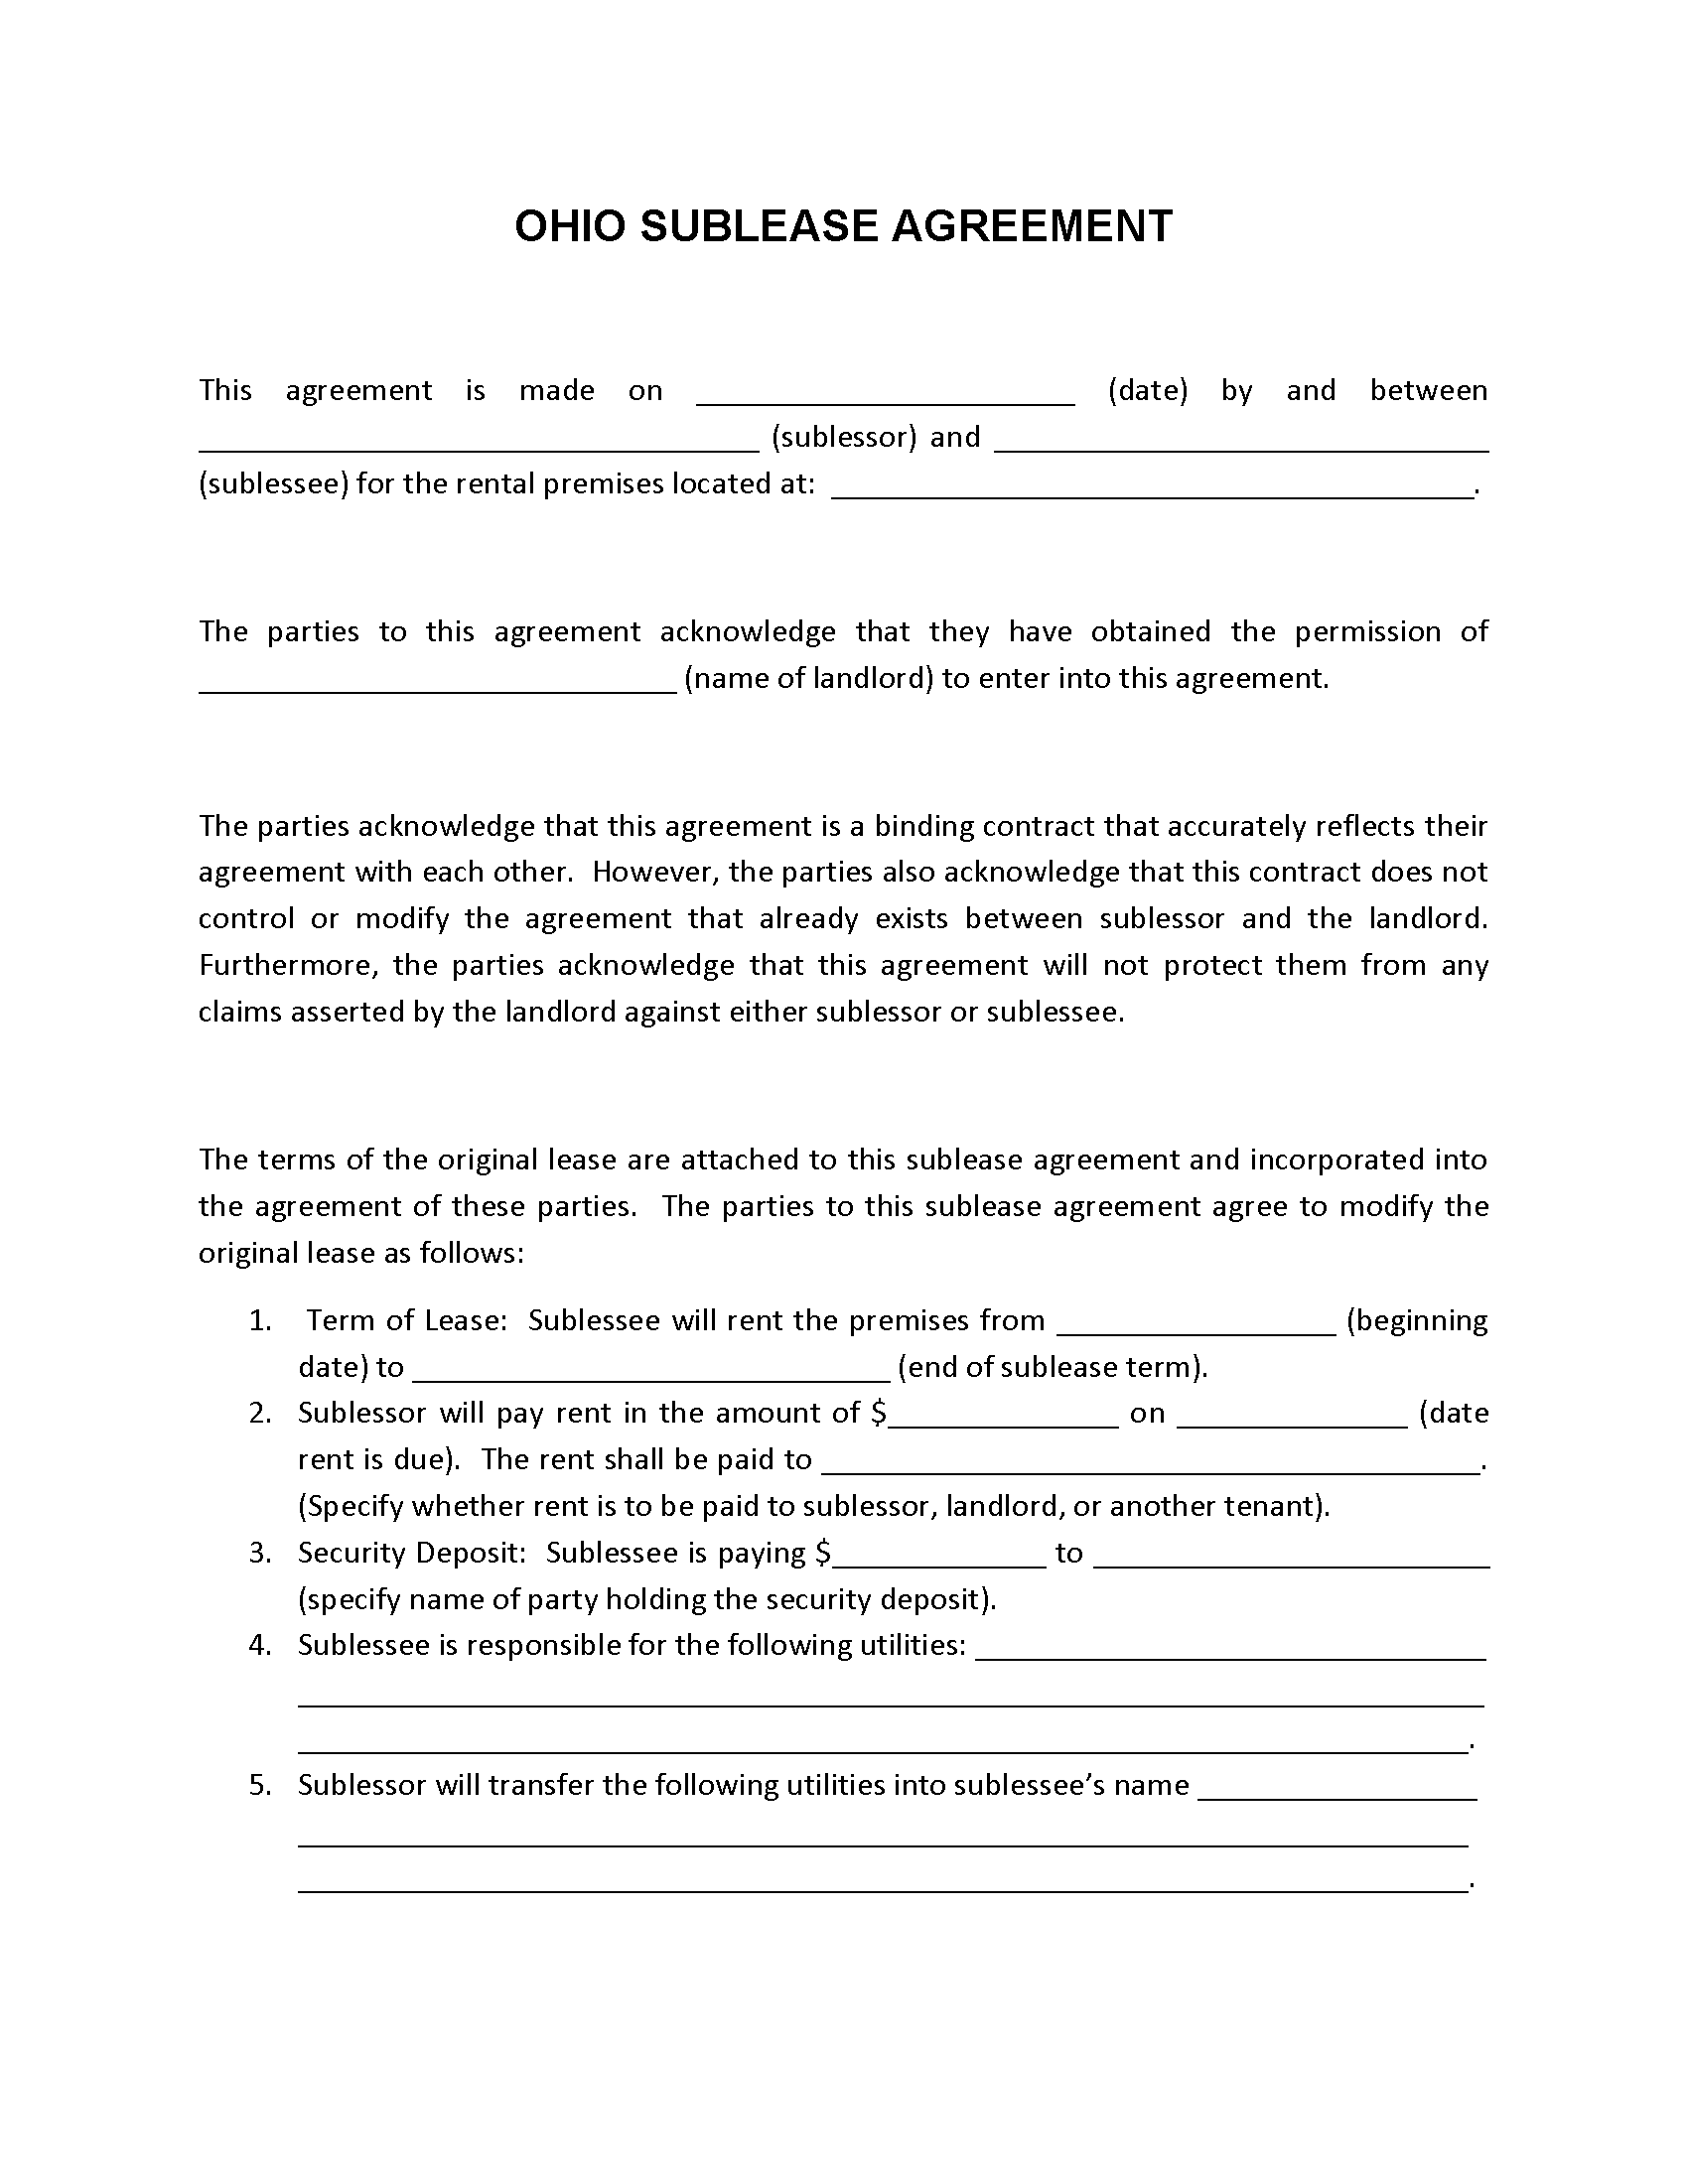 free-ohio-sublease-agreement-pdf